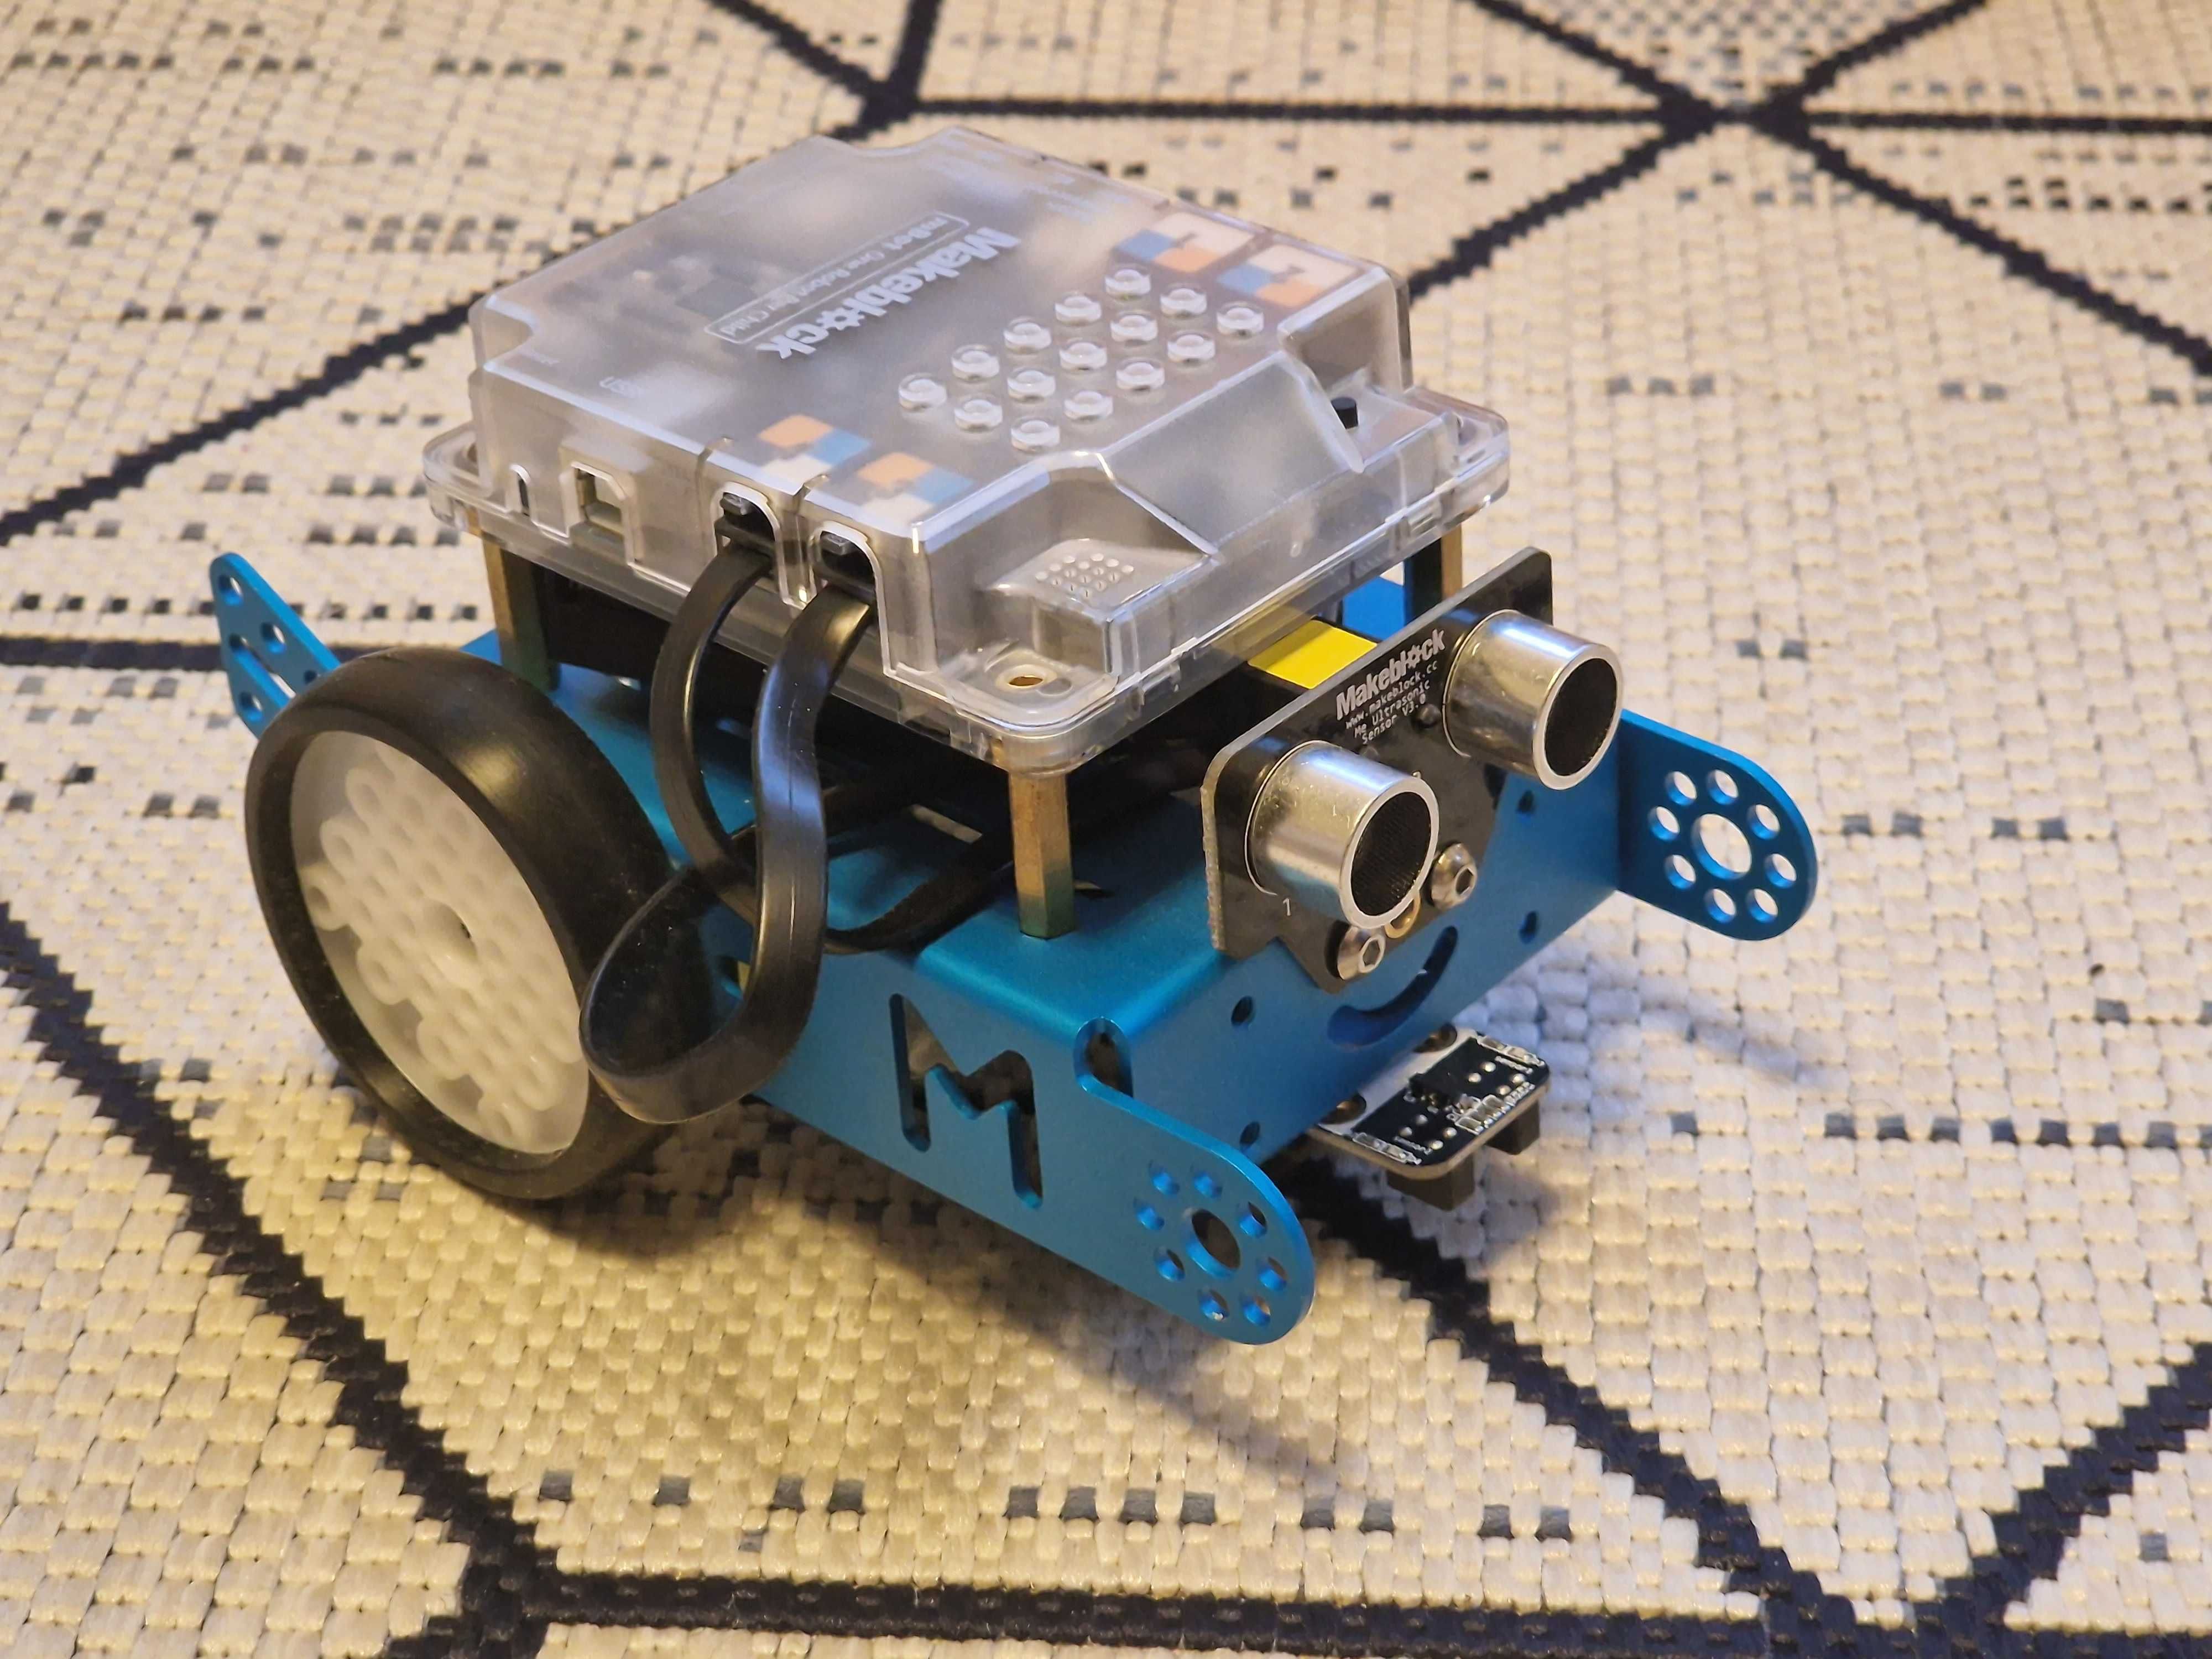 Robot Makeblock mBot Educational Kit